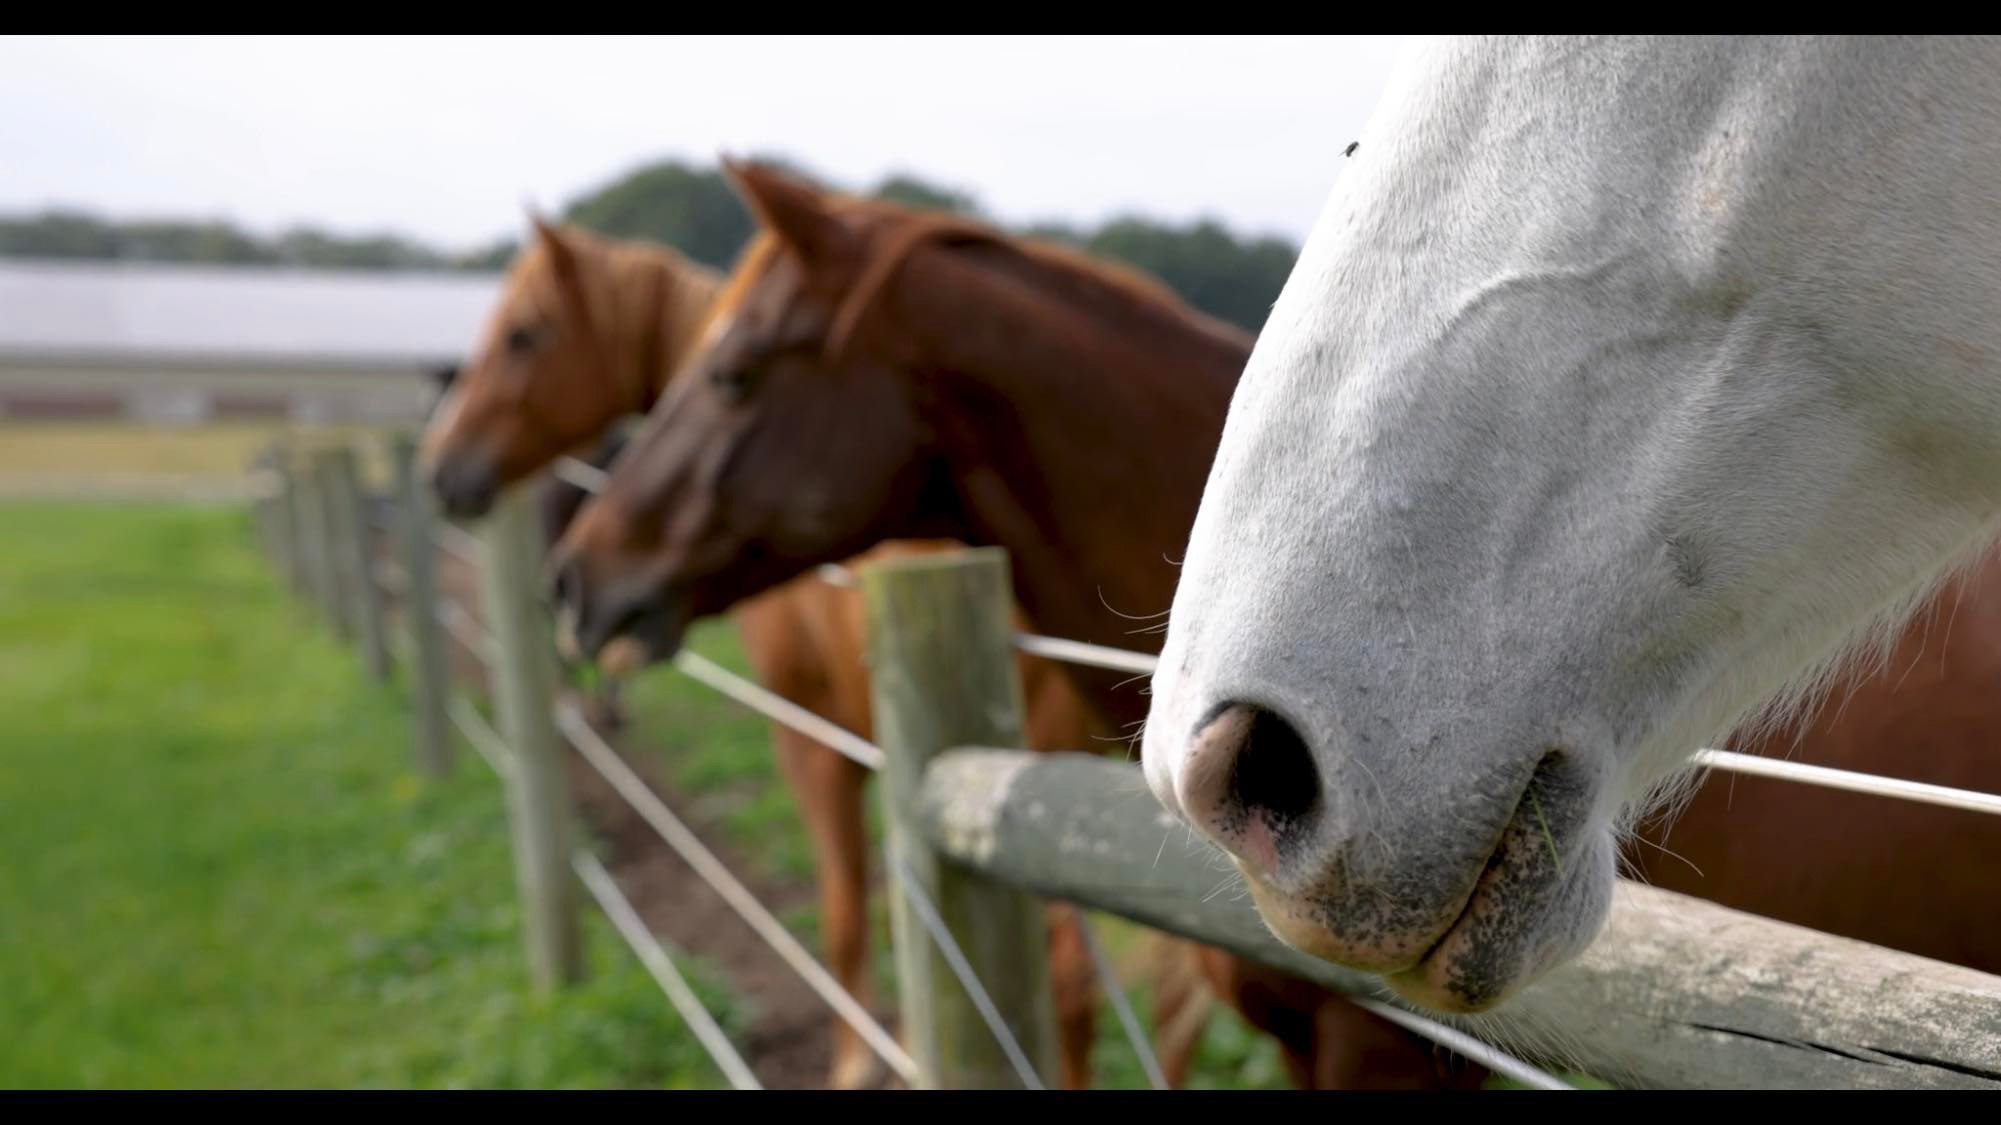 Elysian Horses - Breeders and Producers of Quality Sport Horses, Cambridgeshire, UK